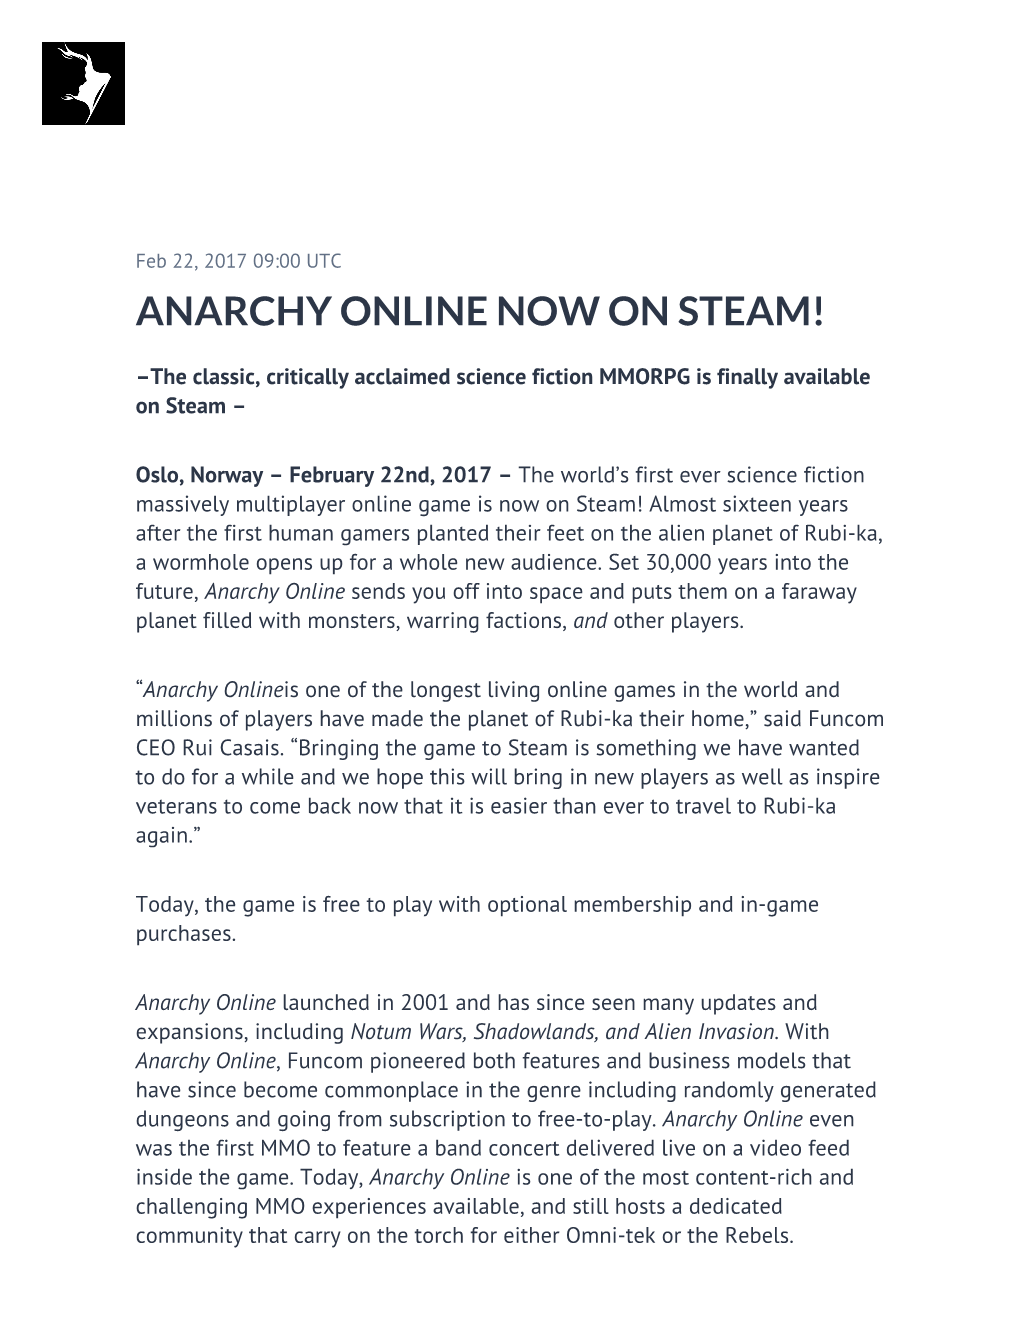 Anarchy Online Now on Steam!